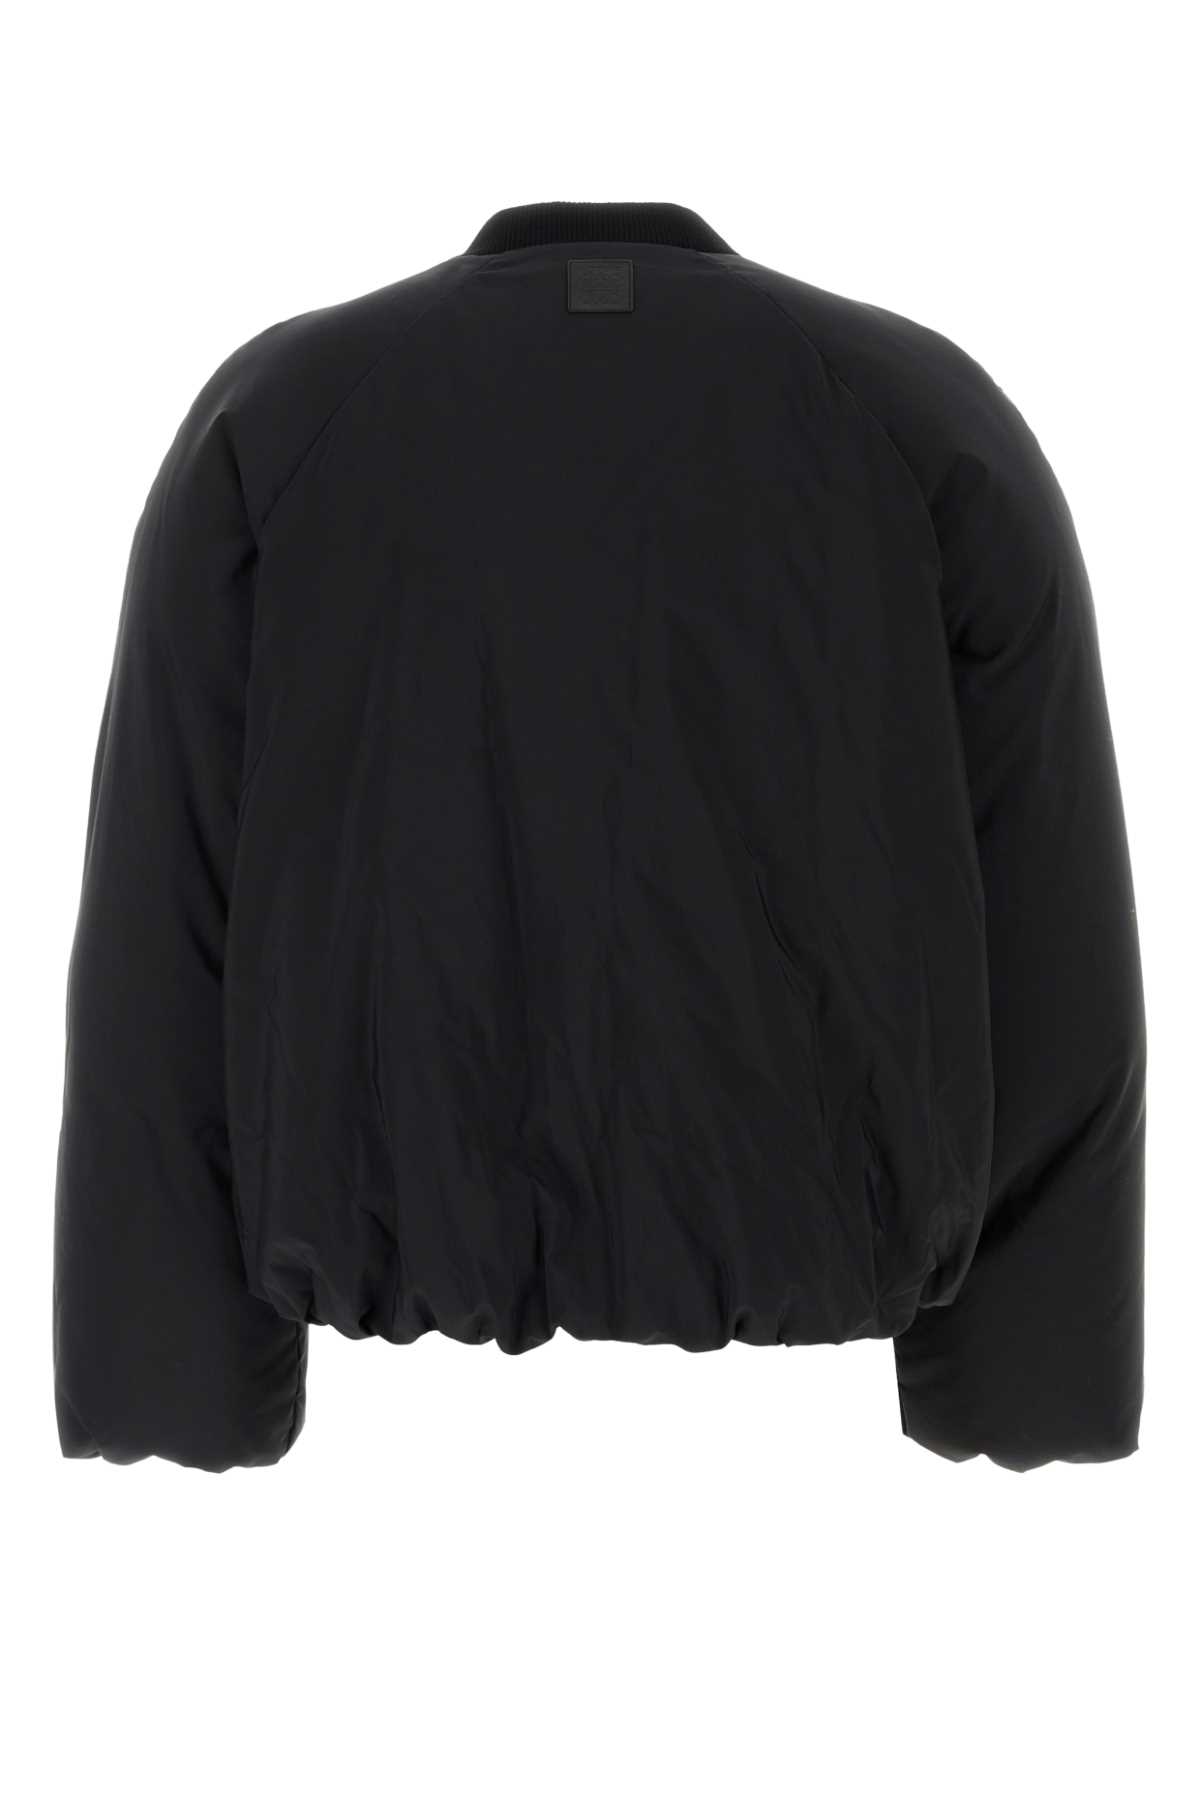 Shop Loewe Black Cotton Blend Padded Jacket